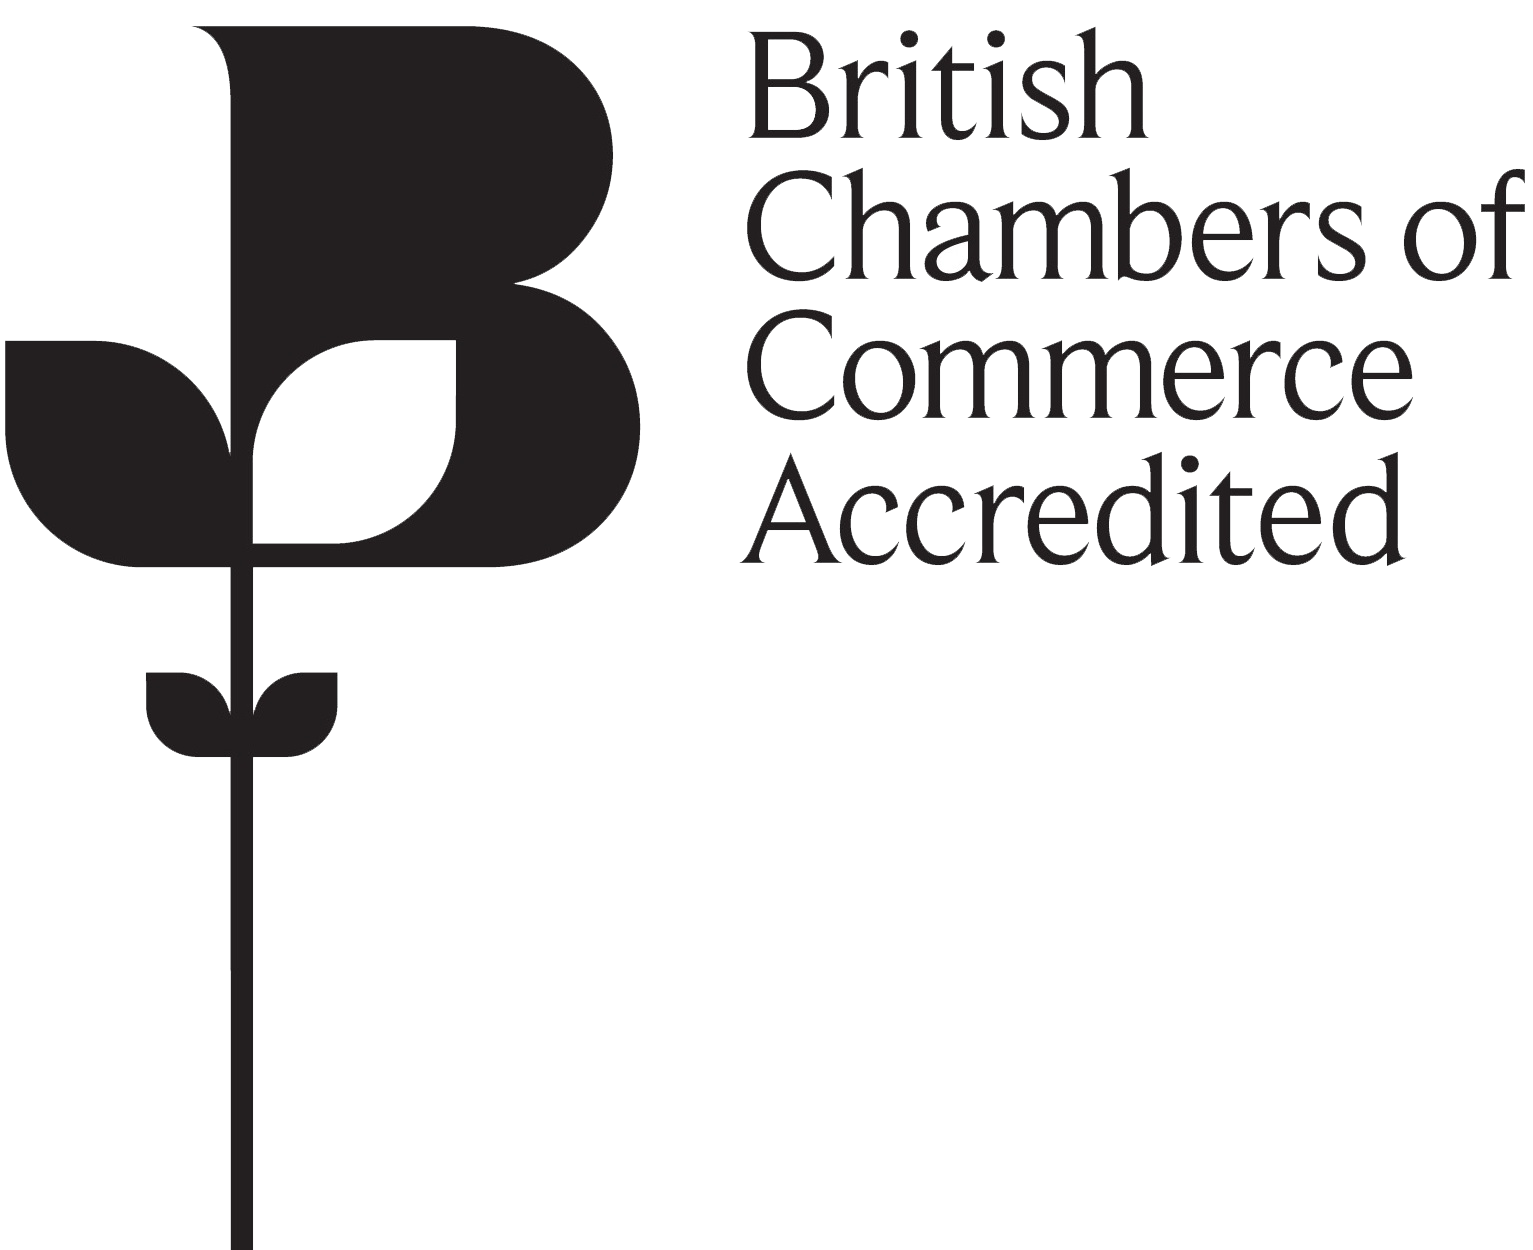 British Chambers of Commerce Accredited